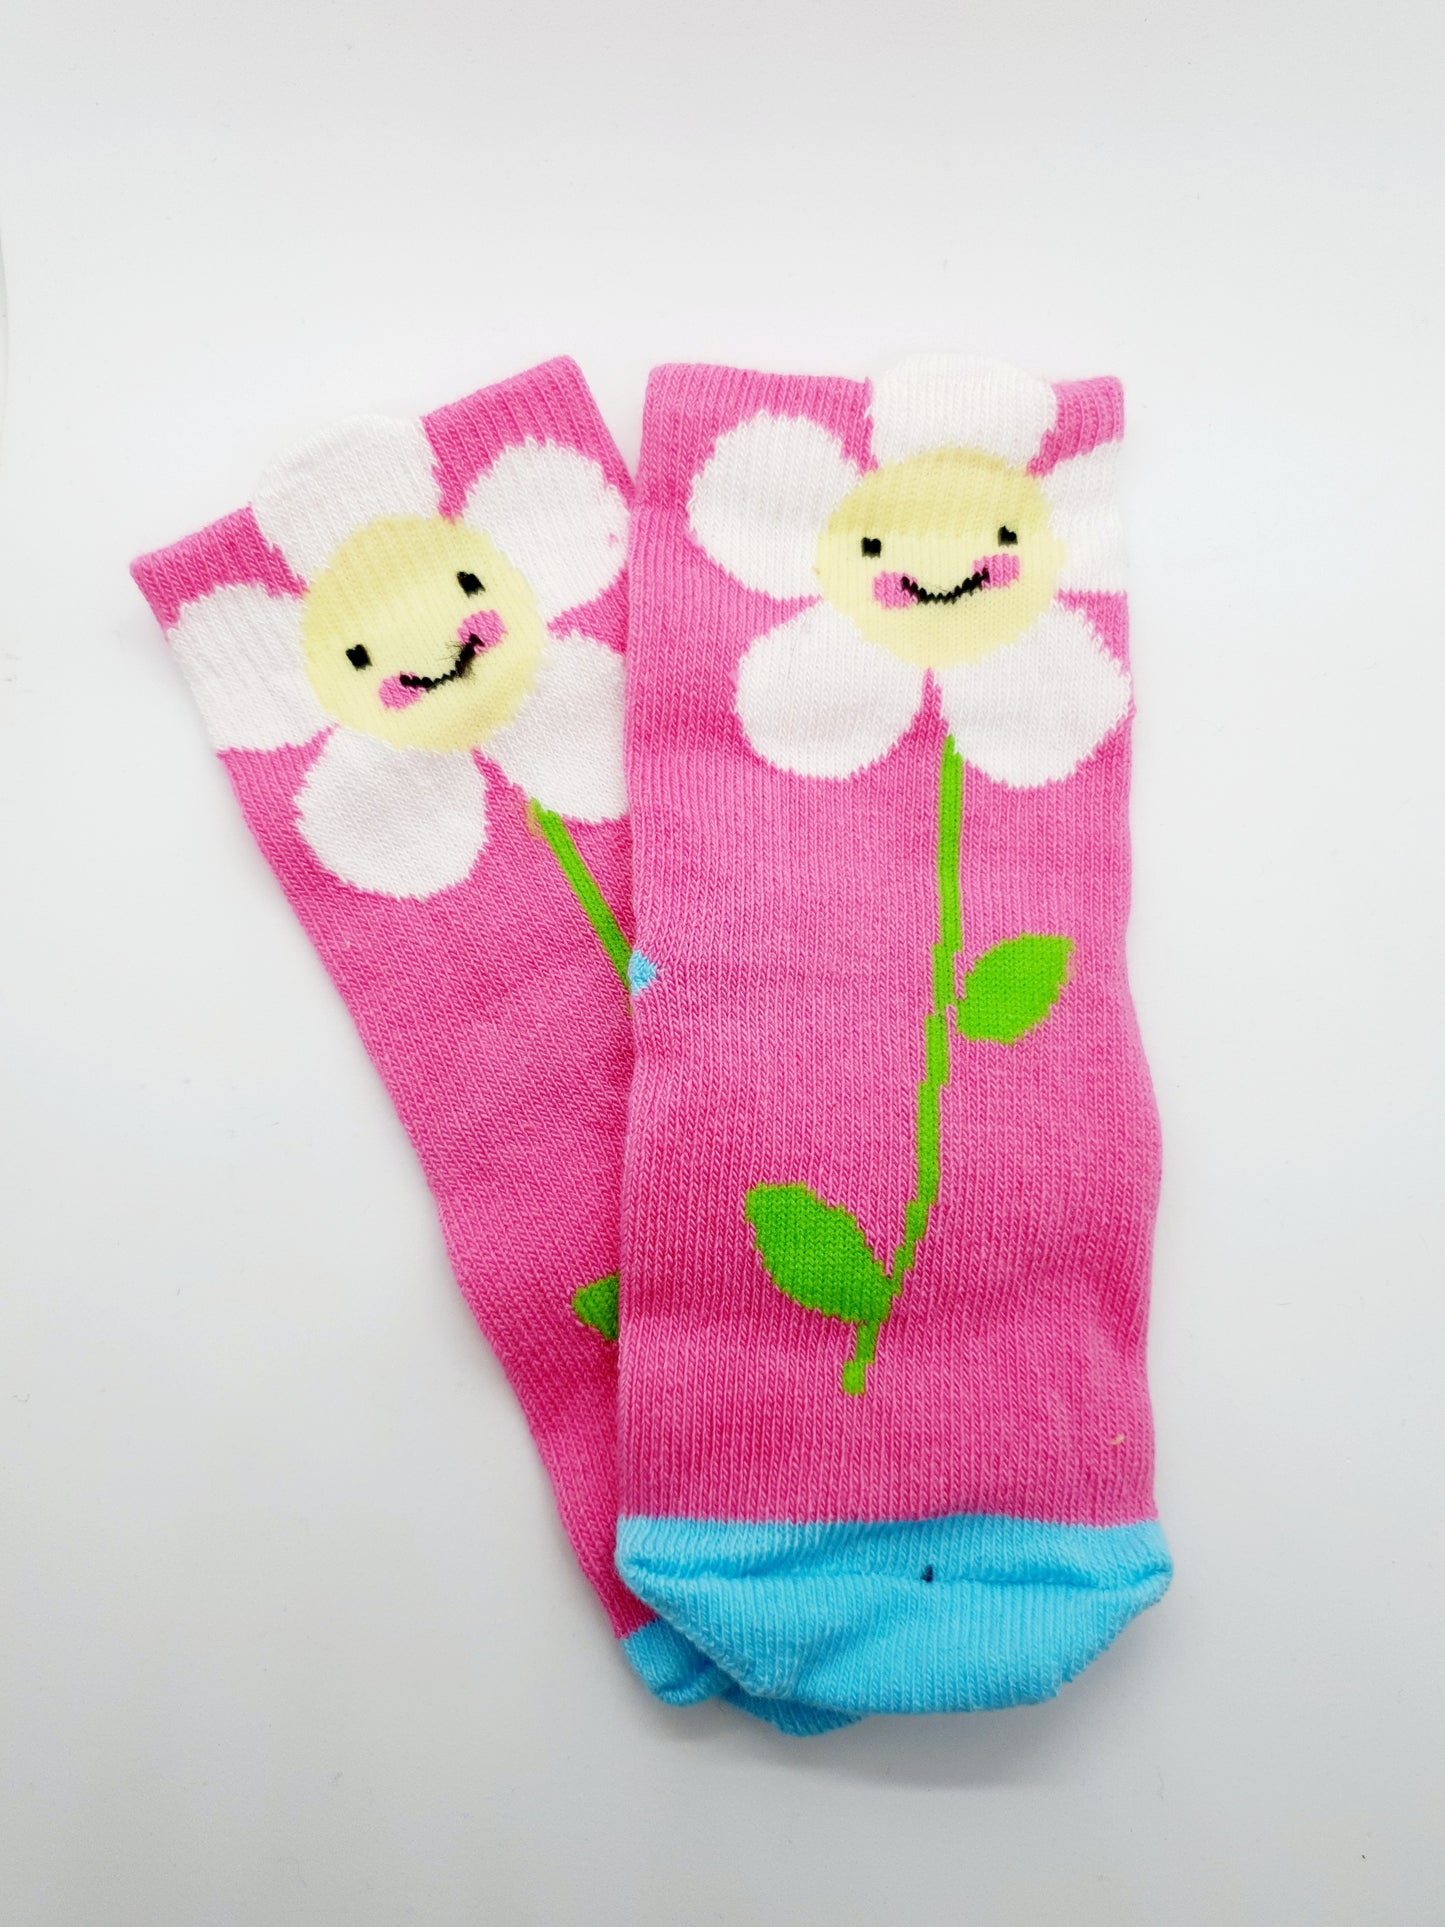 Toddler socks – Daisy 1-2 years